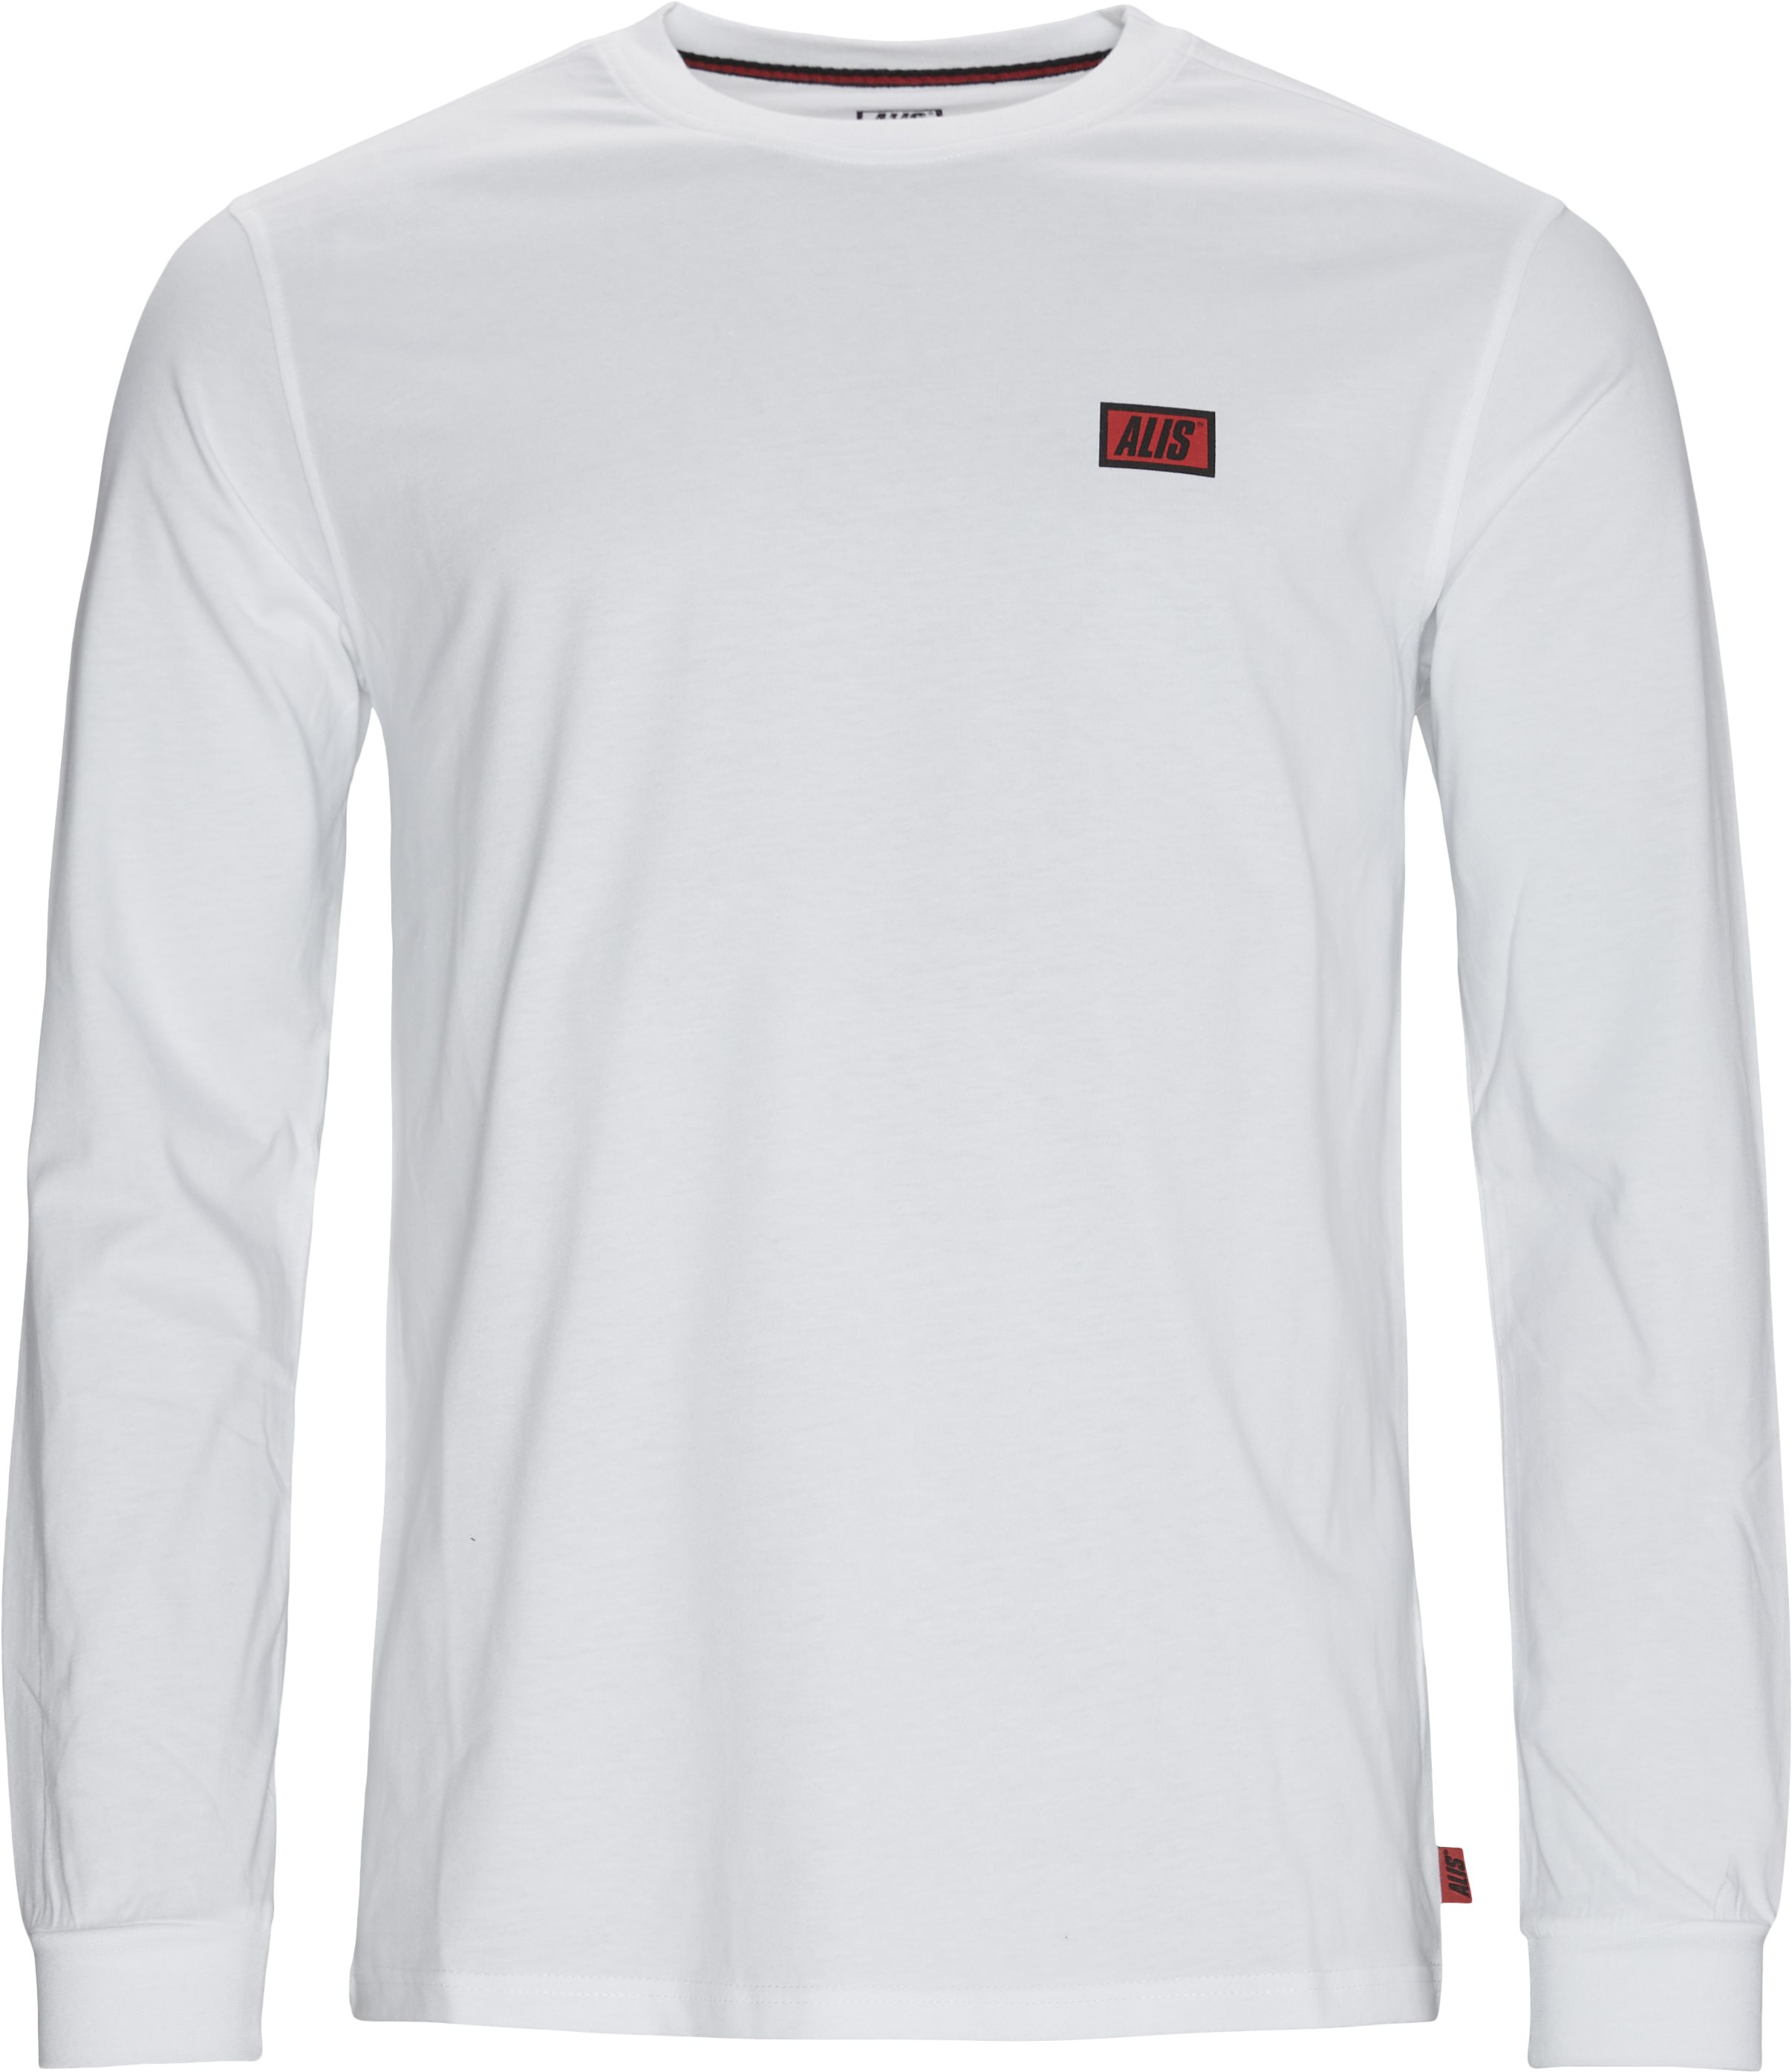 Am3011 L/Æ Tee - T-shirts - Regular fit - Hvid